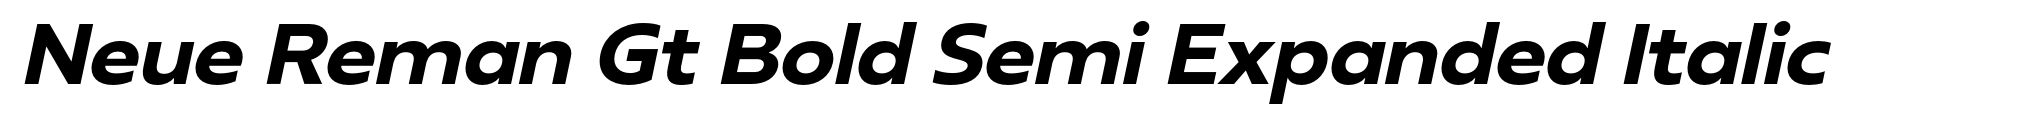 Neue Reman Gt Bold Semi Expanded Italic image